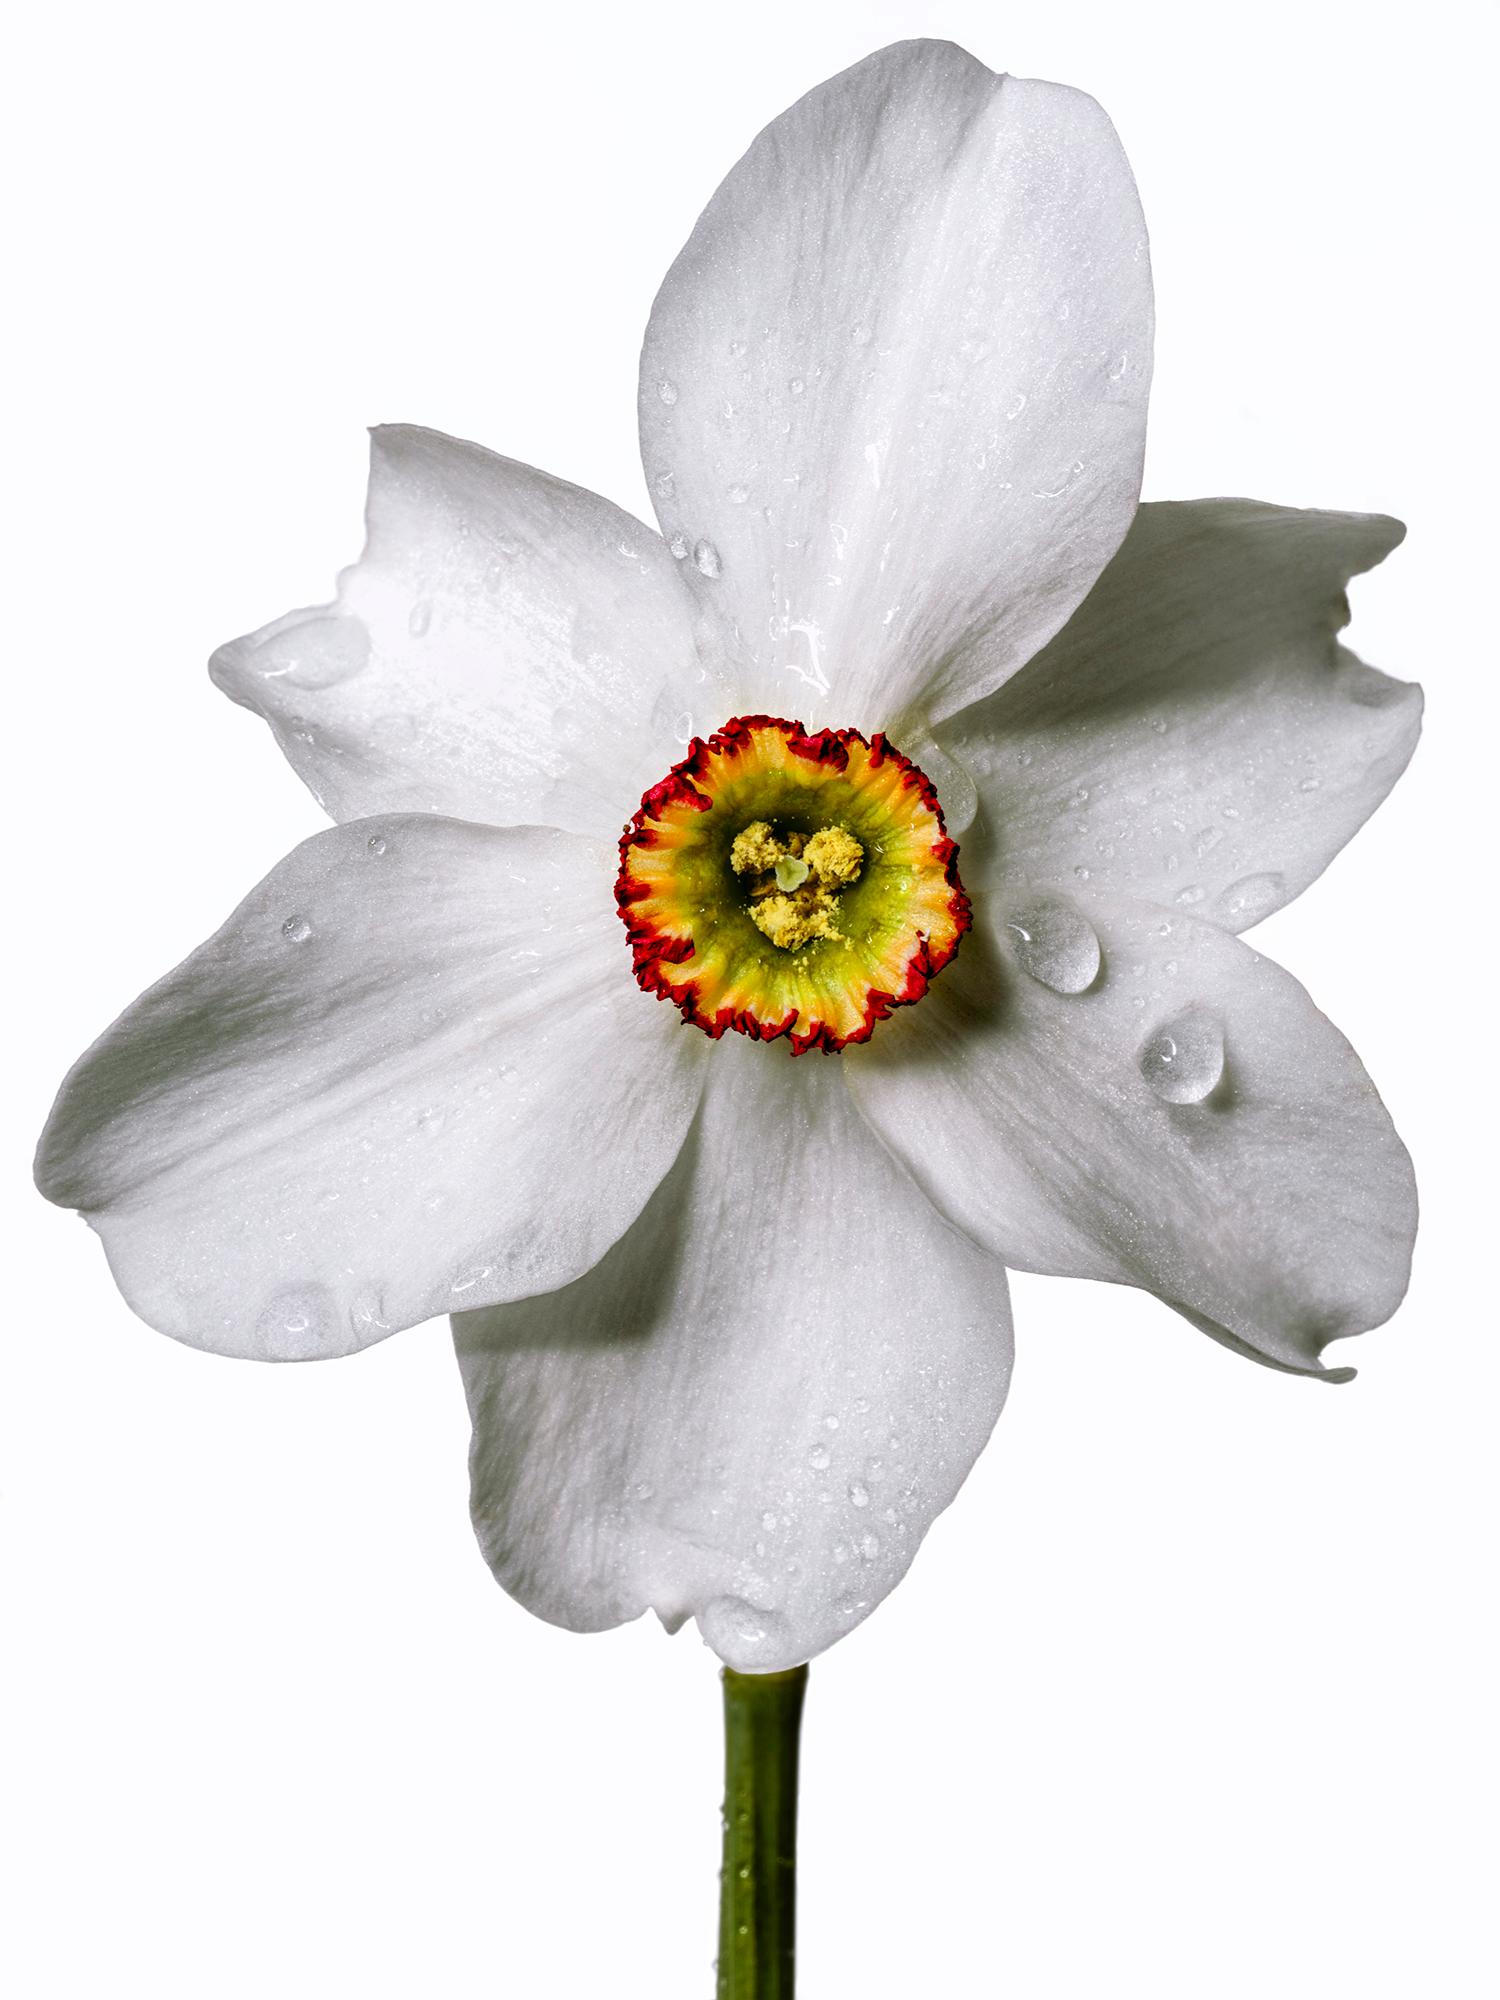 Linda Rosewall Color Photograph - Flora Italiana (Narcissus Poetic) - large format botanical still life photograph